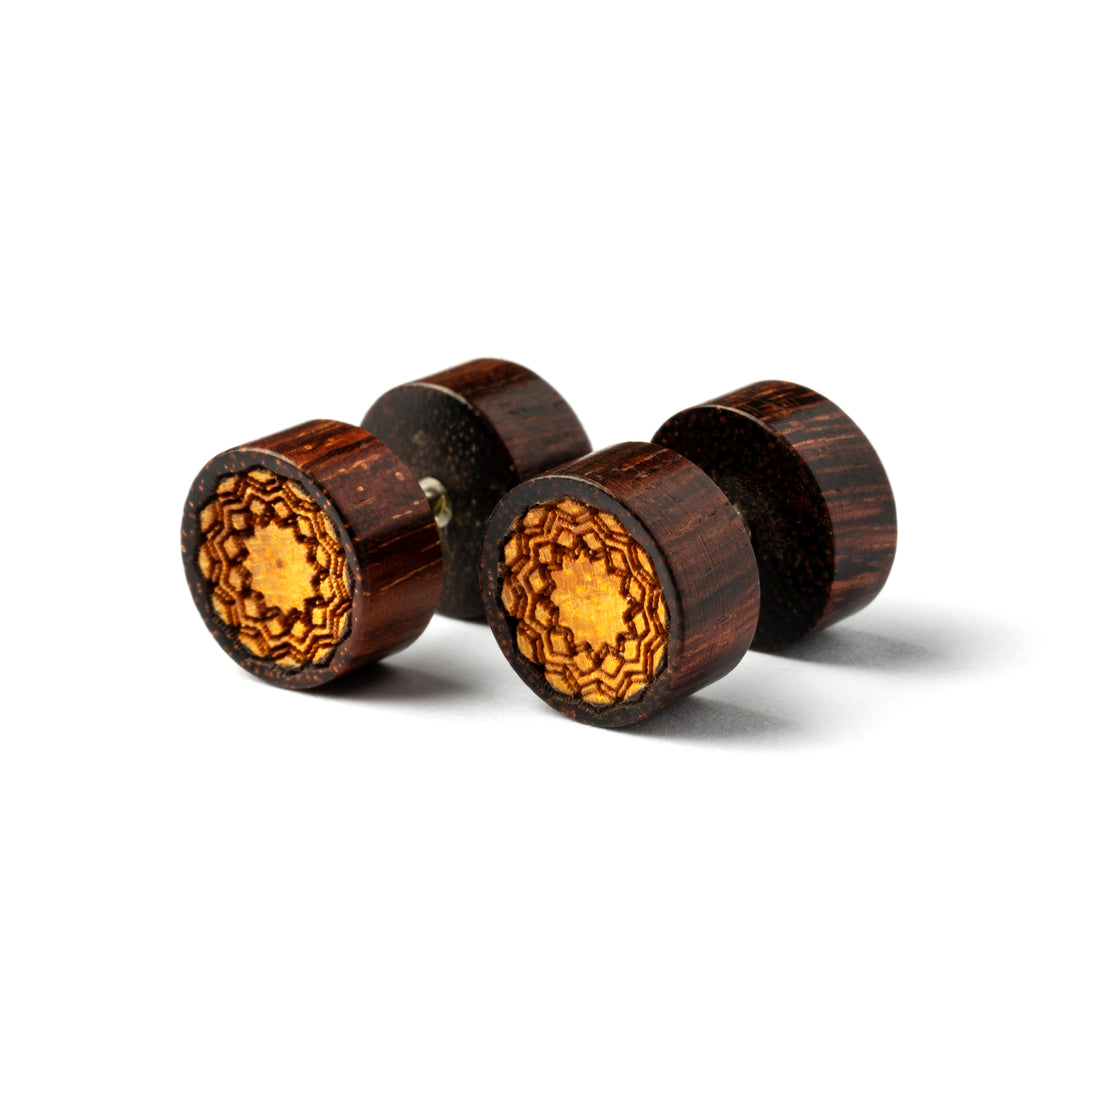 pair of Tamarind wood fake plugs earrings right side view